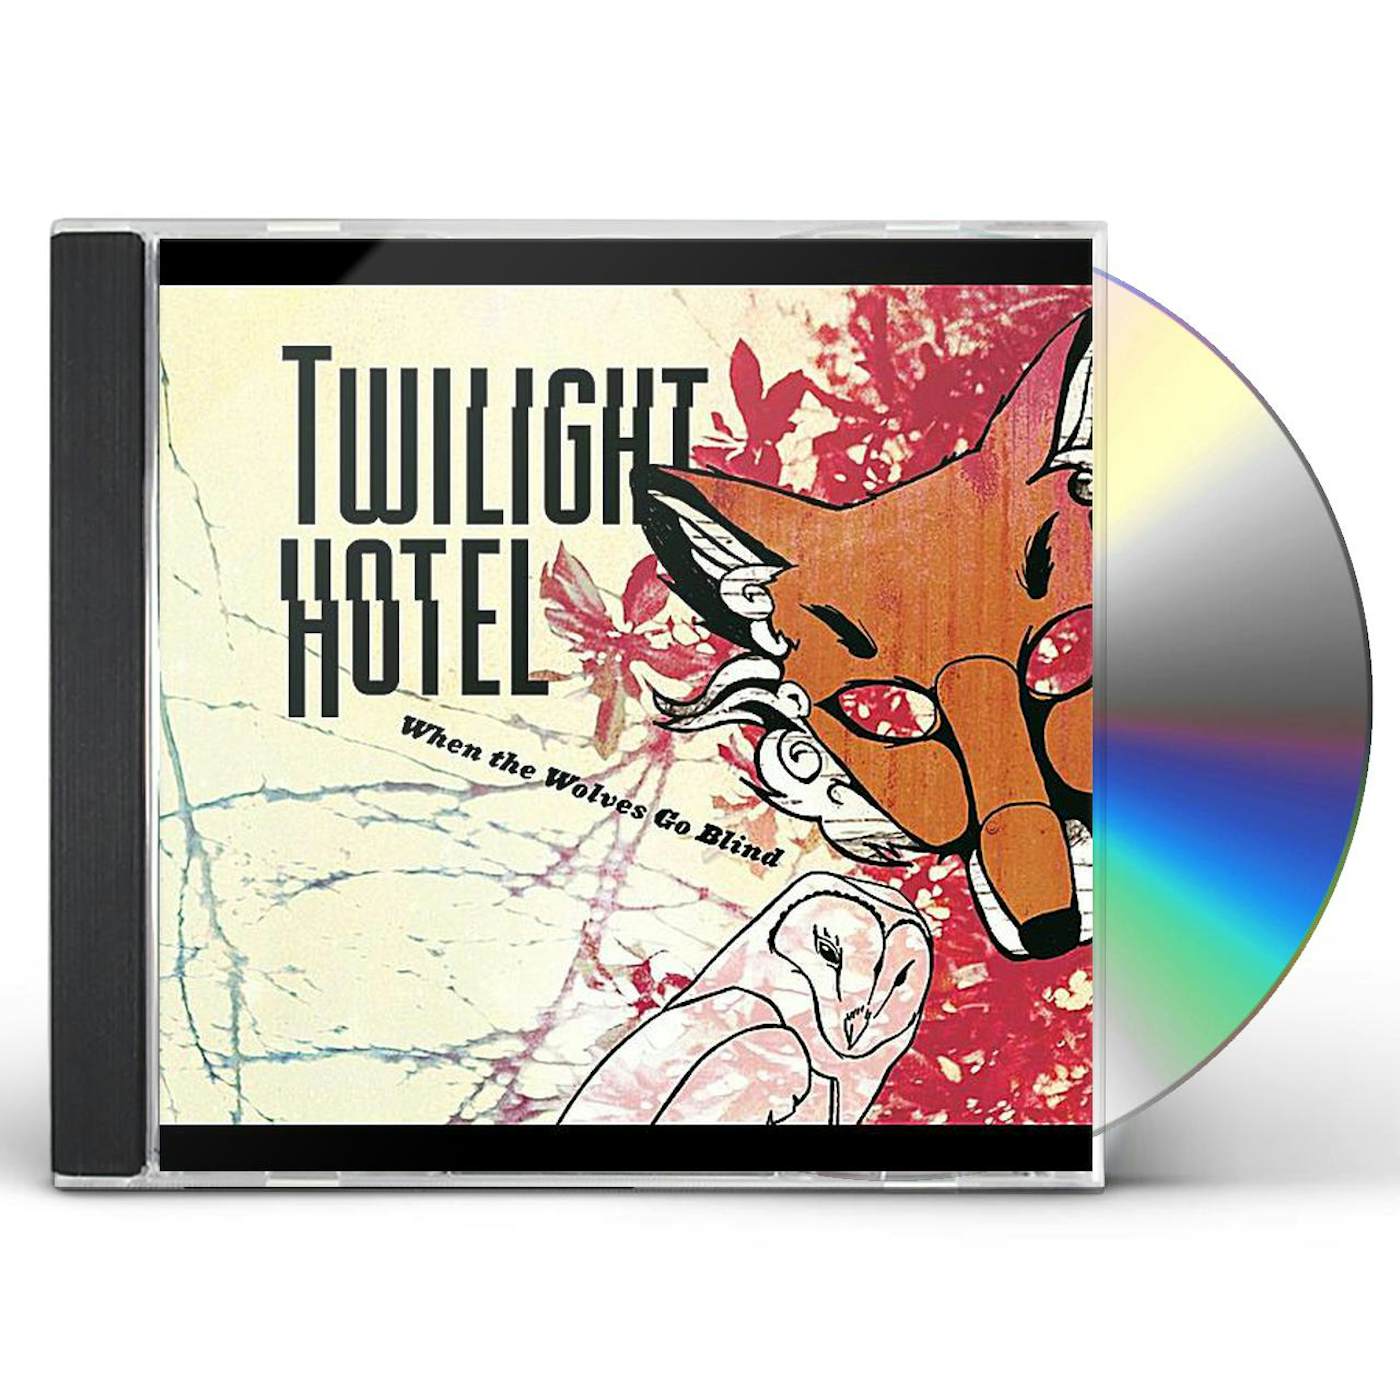 Twilight Hotel WHEN THE WOLVES GO BLIND CD